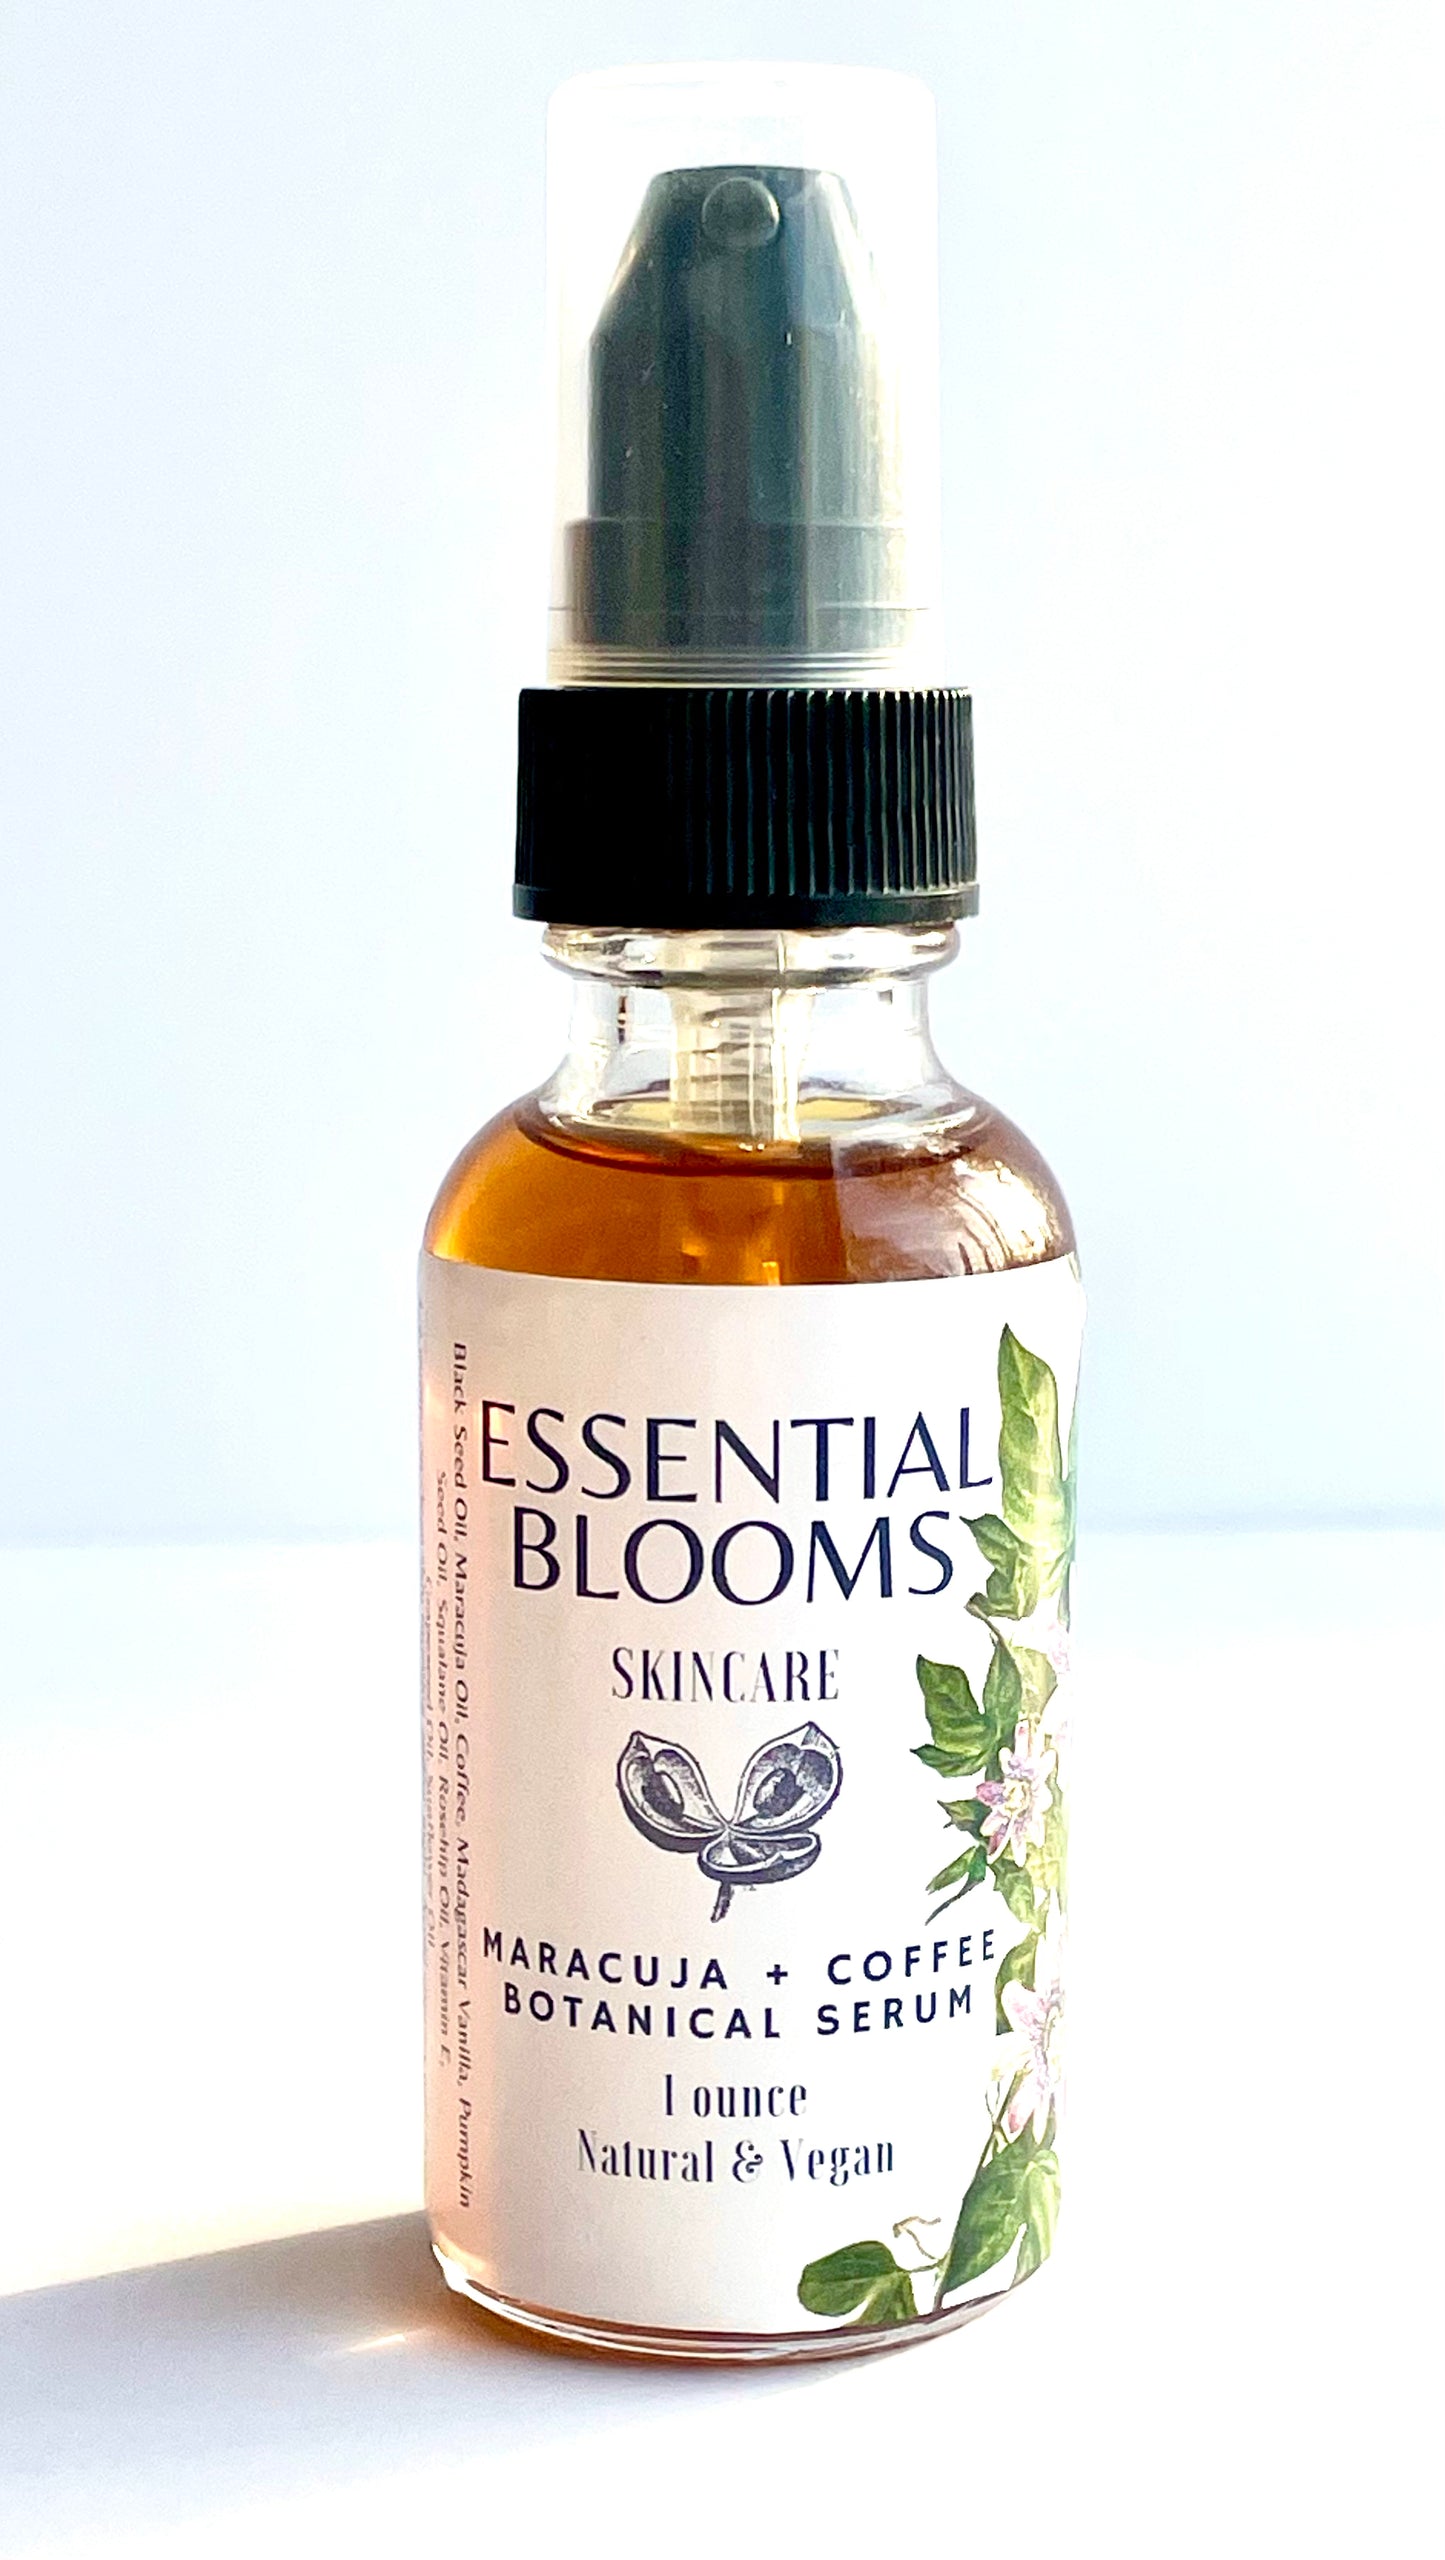 Maracuja + Coffee Botanical Serum